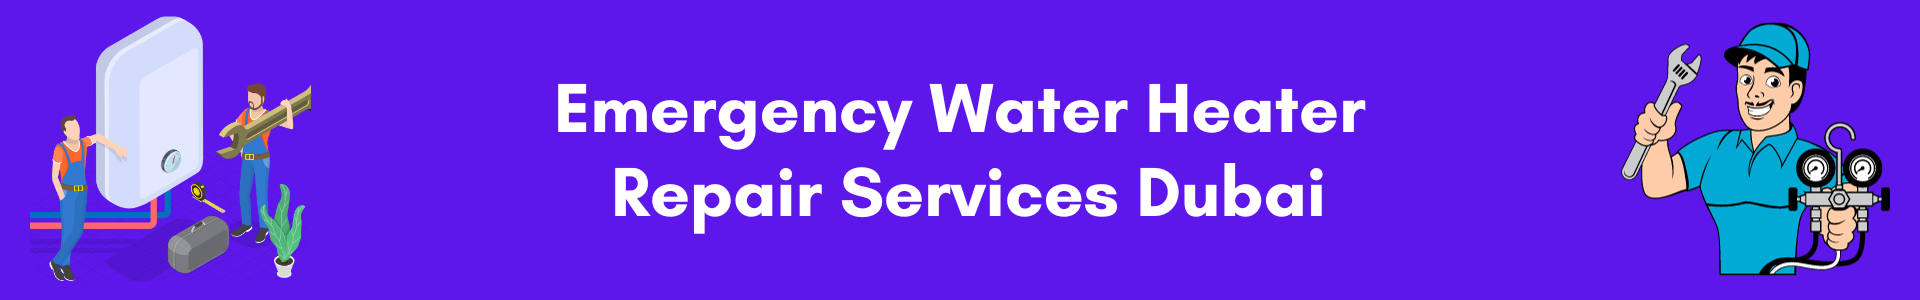 Emergency Water Heater Repair Services Dubai